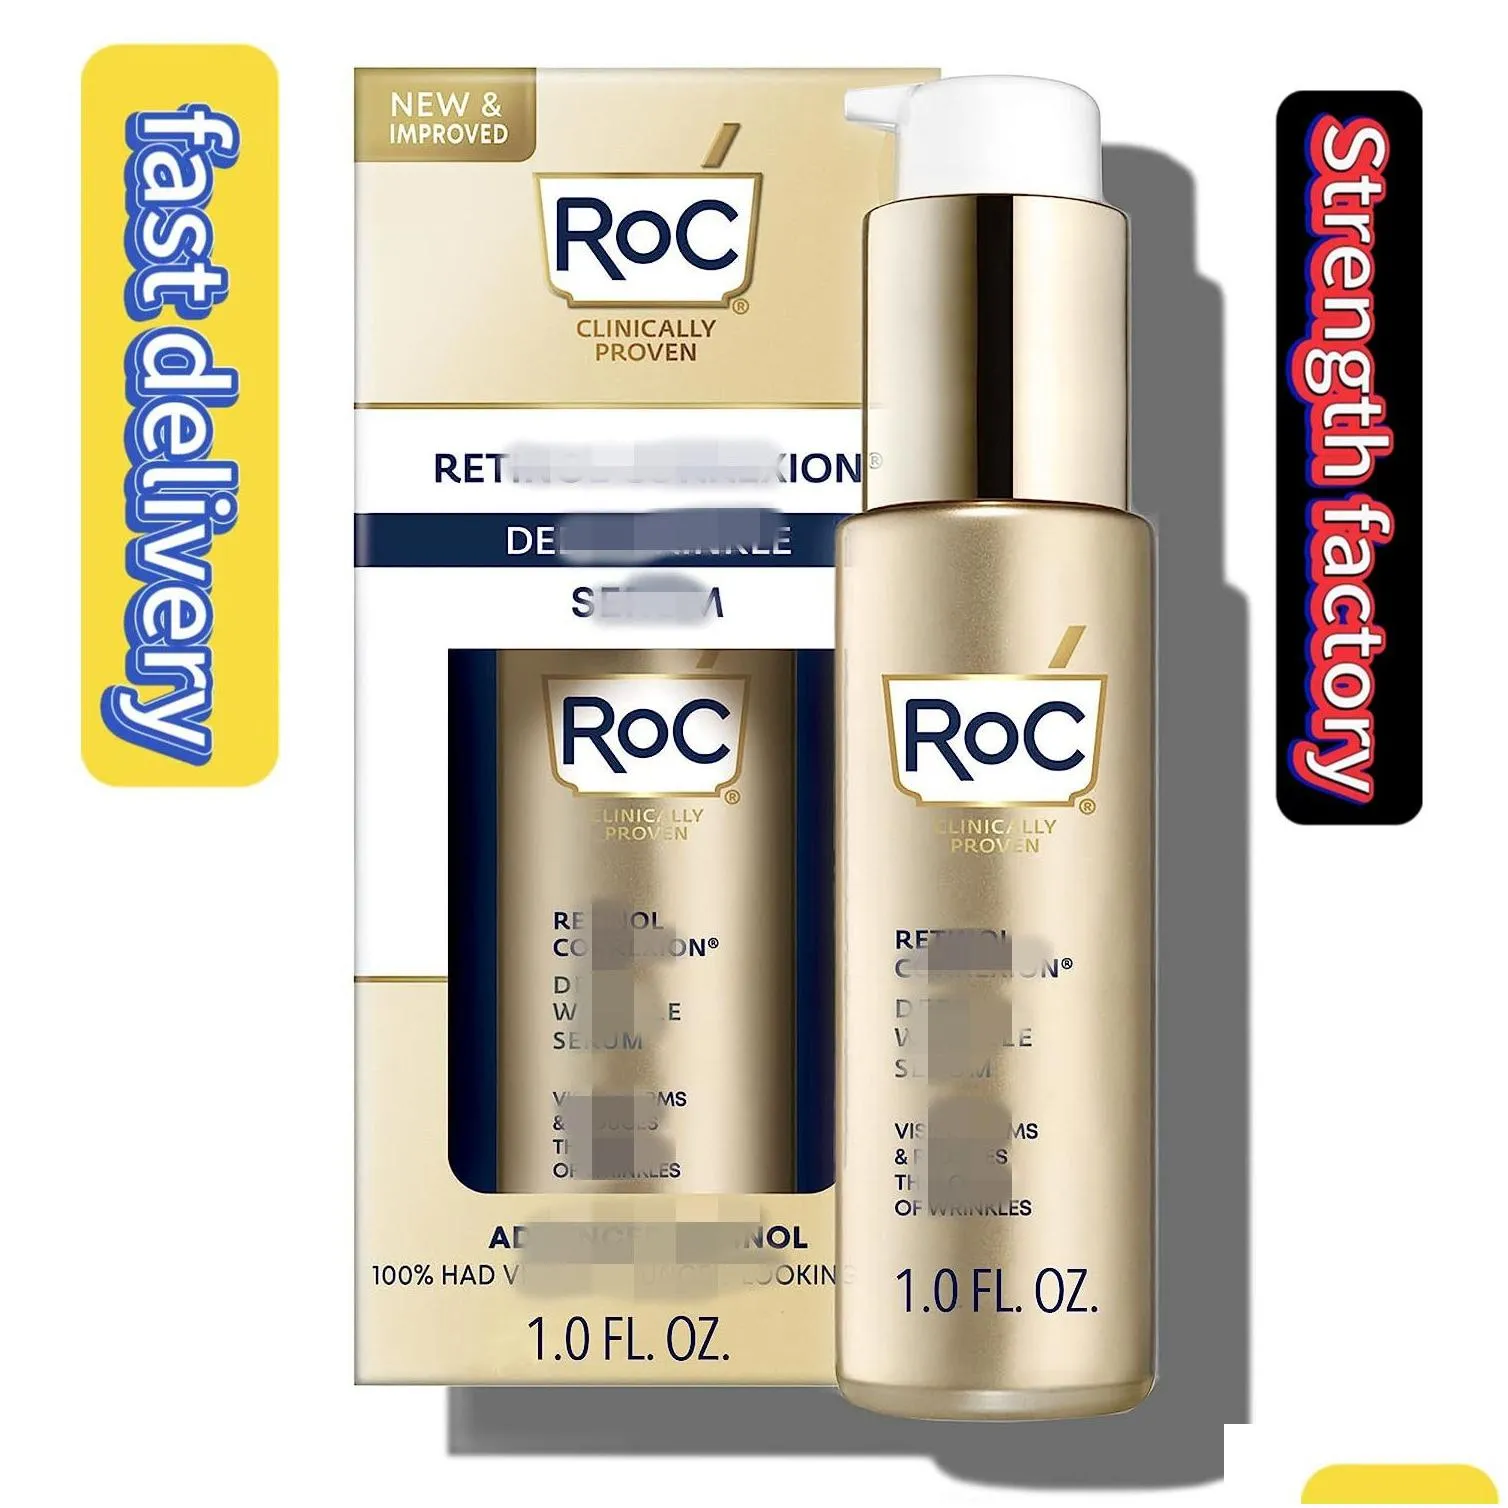 roc in stock roc night cream roc face skin care 1oz 30ml high quality